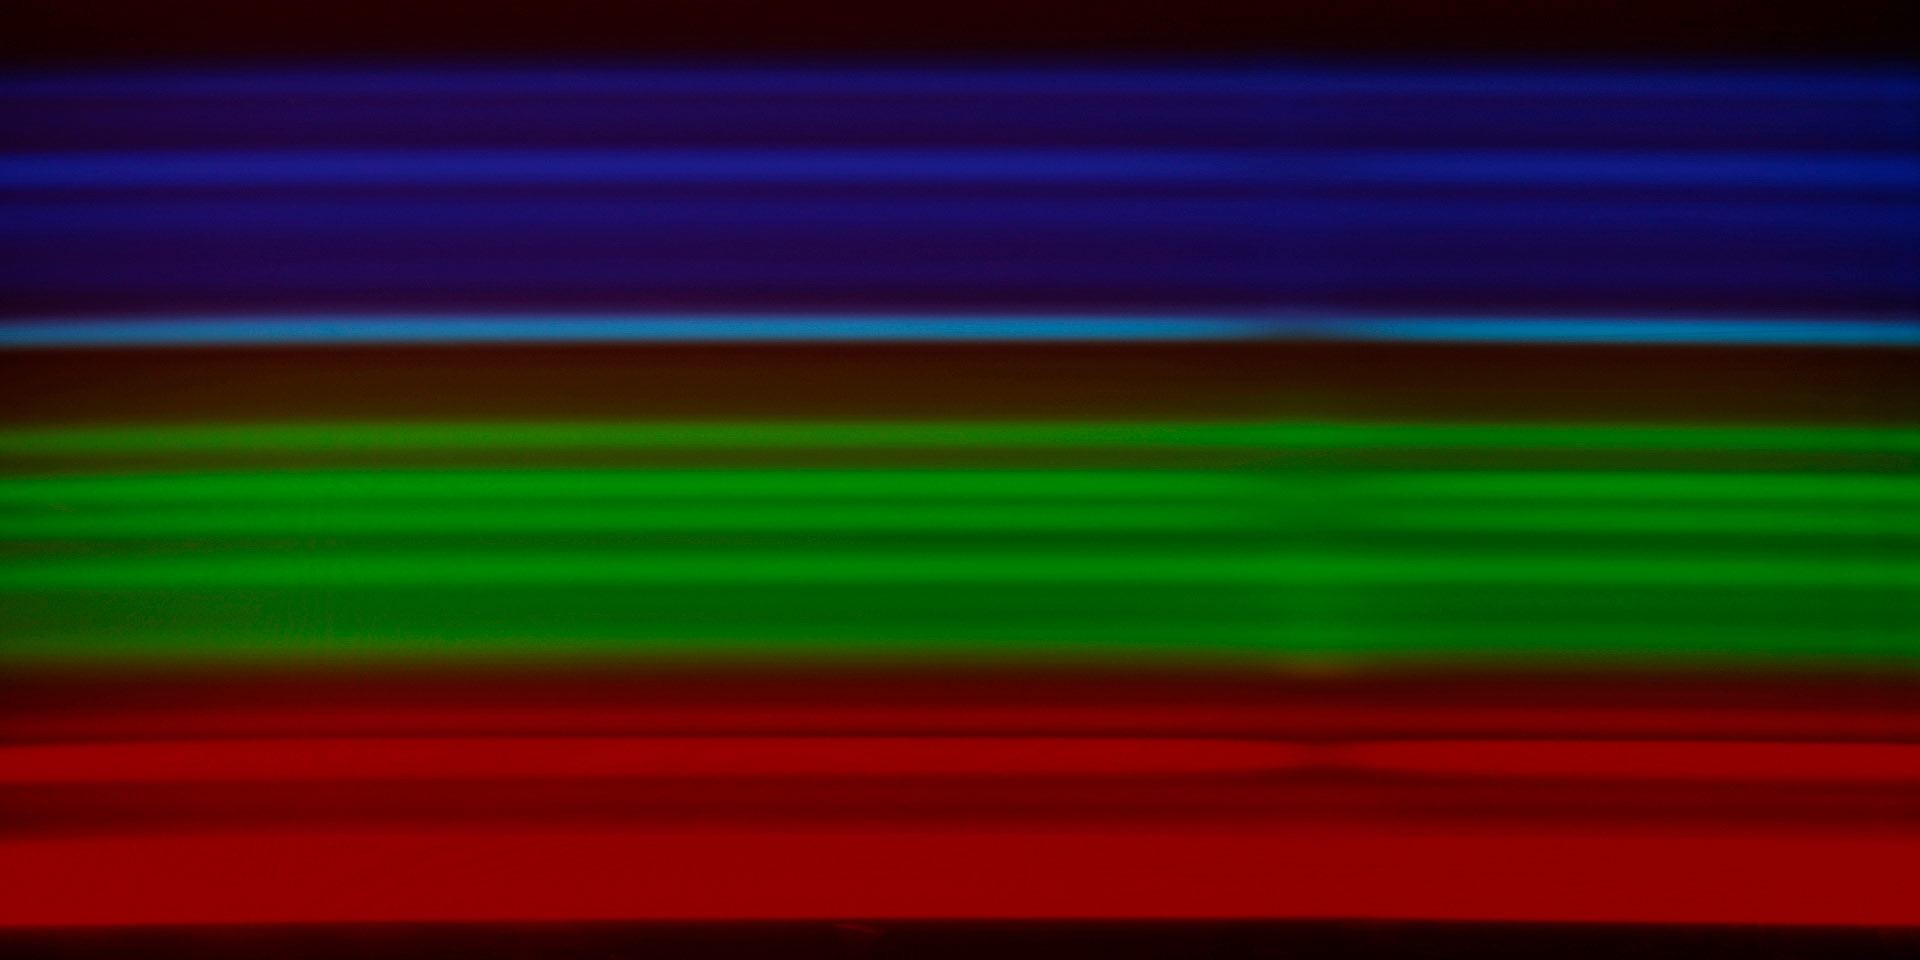 Emission Spectrum of Oxygen #2, 2011